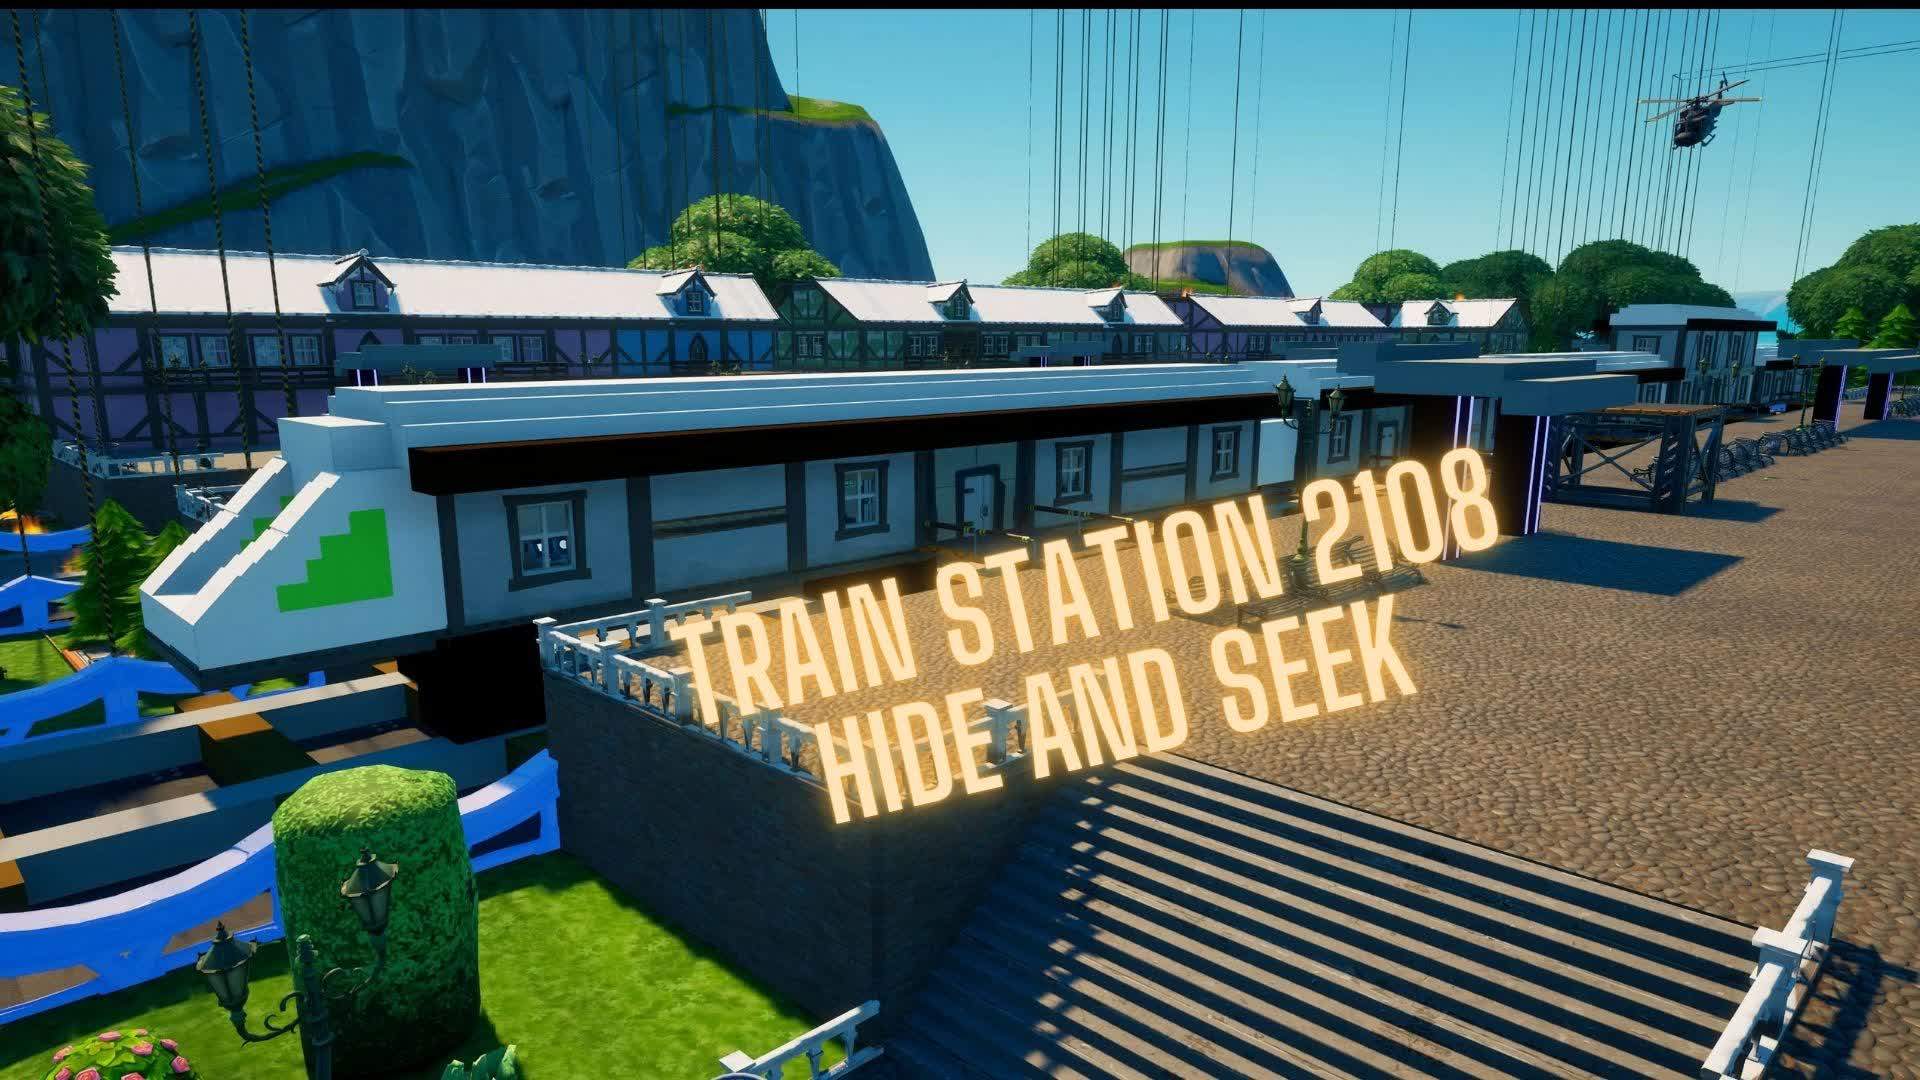 Train Station 2108 HNS